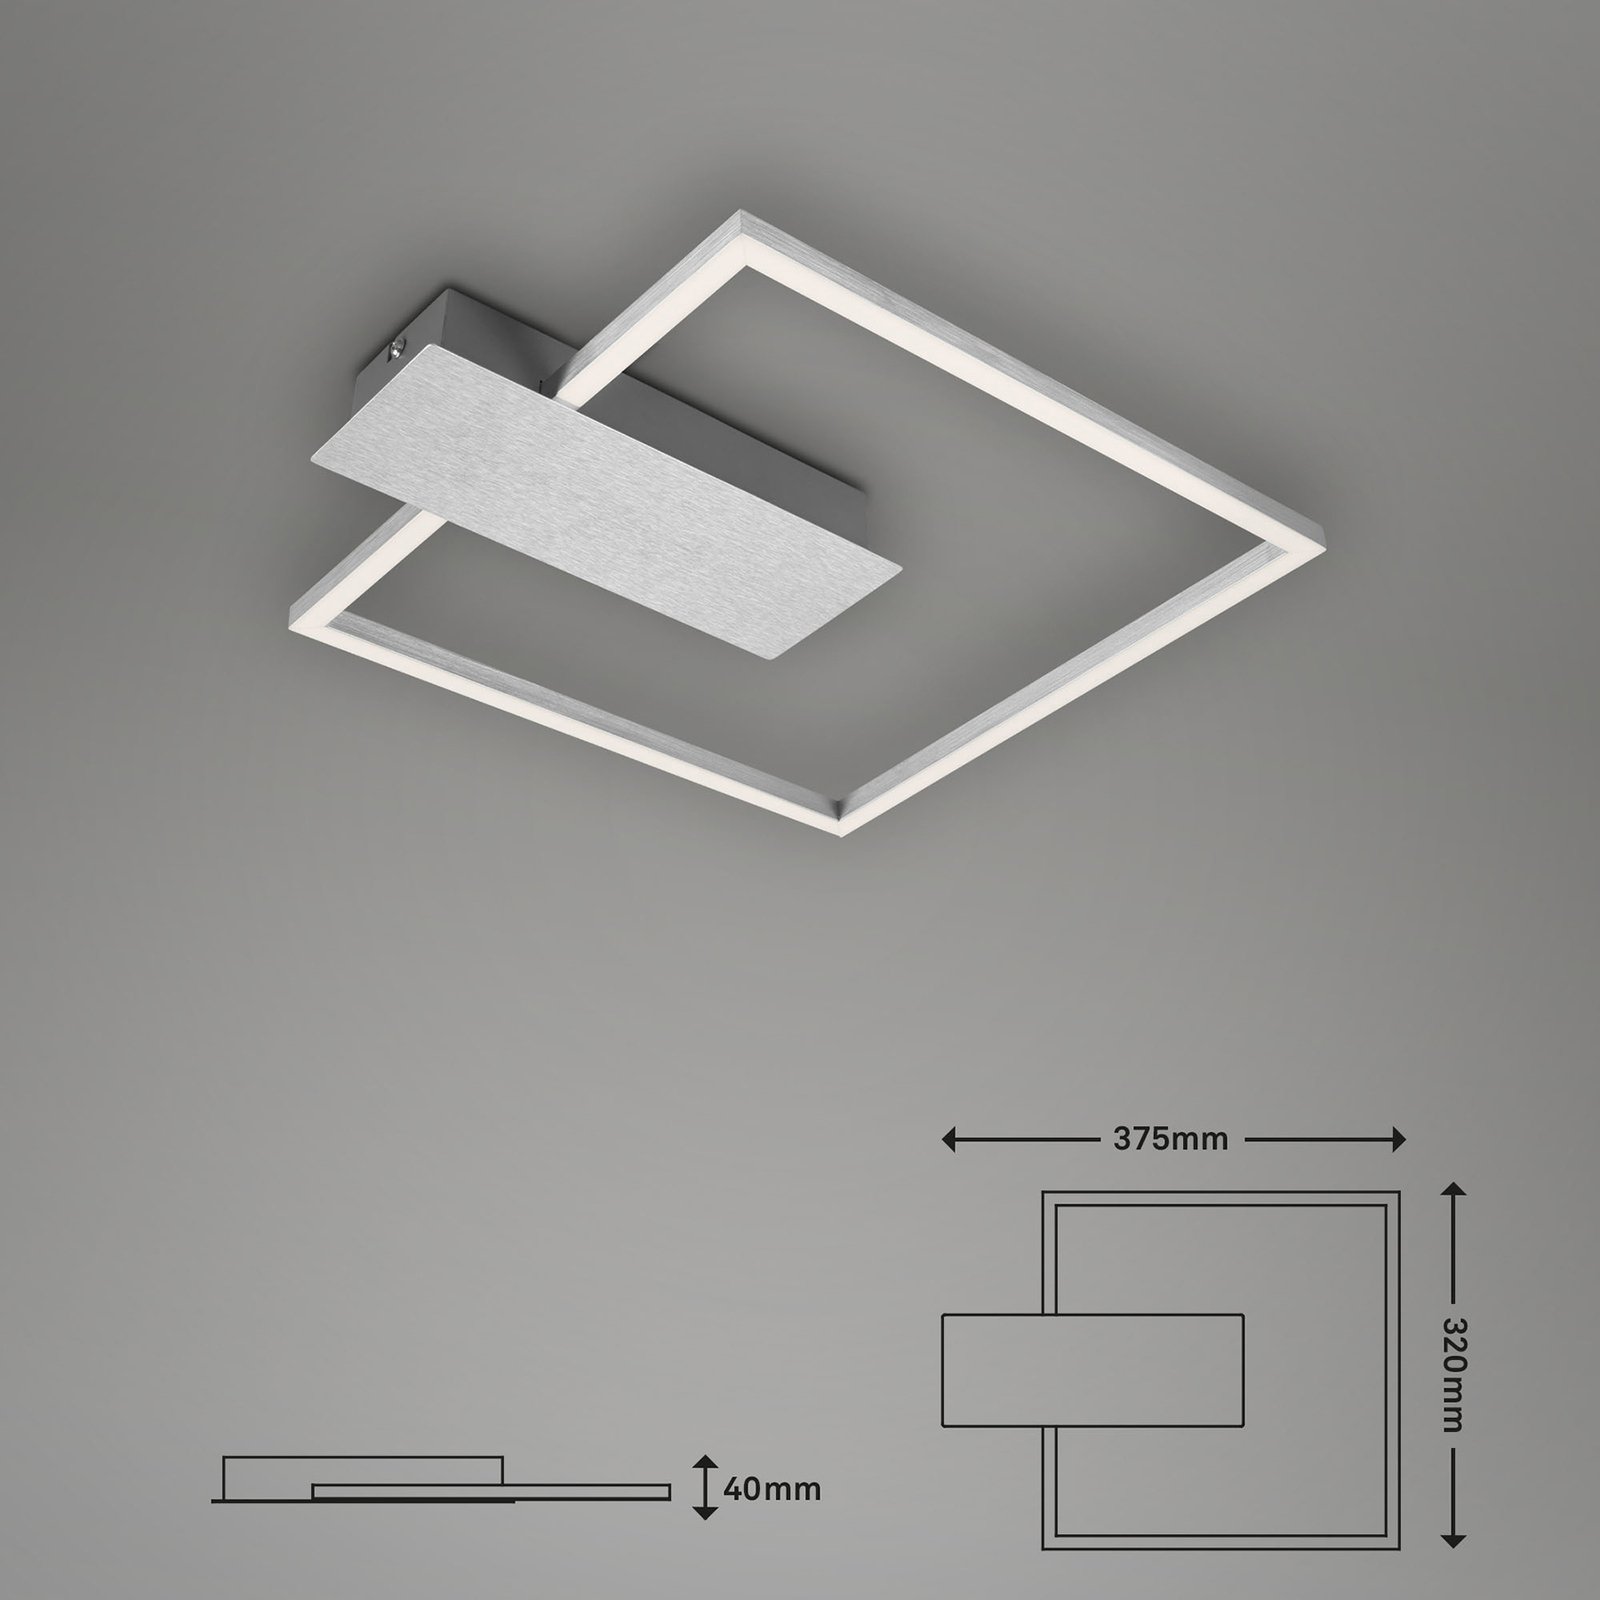 LED stropní svítidlo Nico Duo 3000K hranaté, chrom